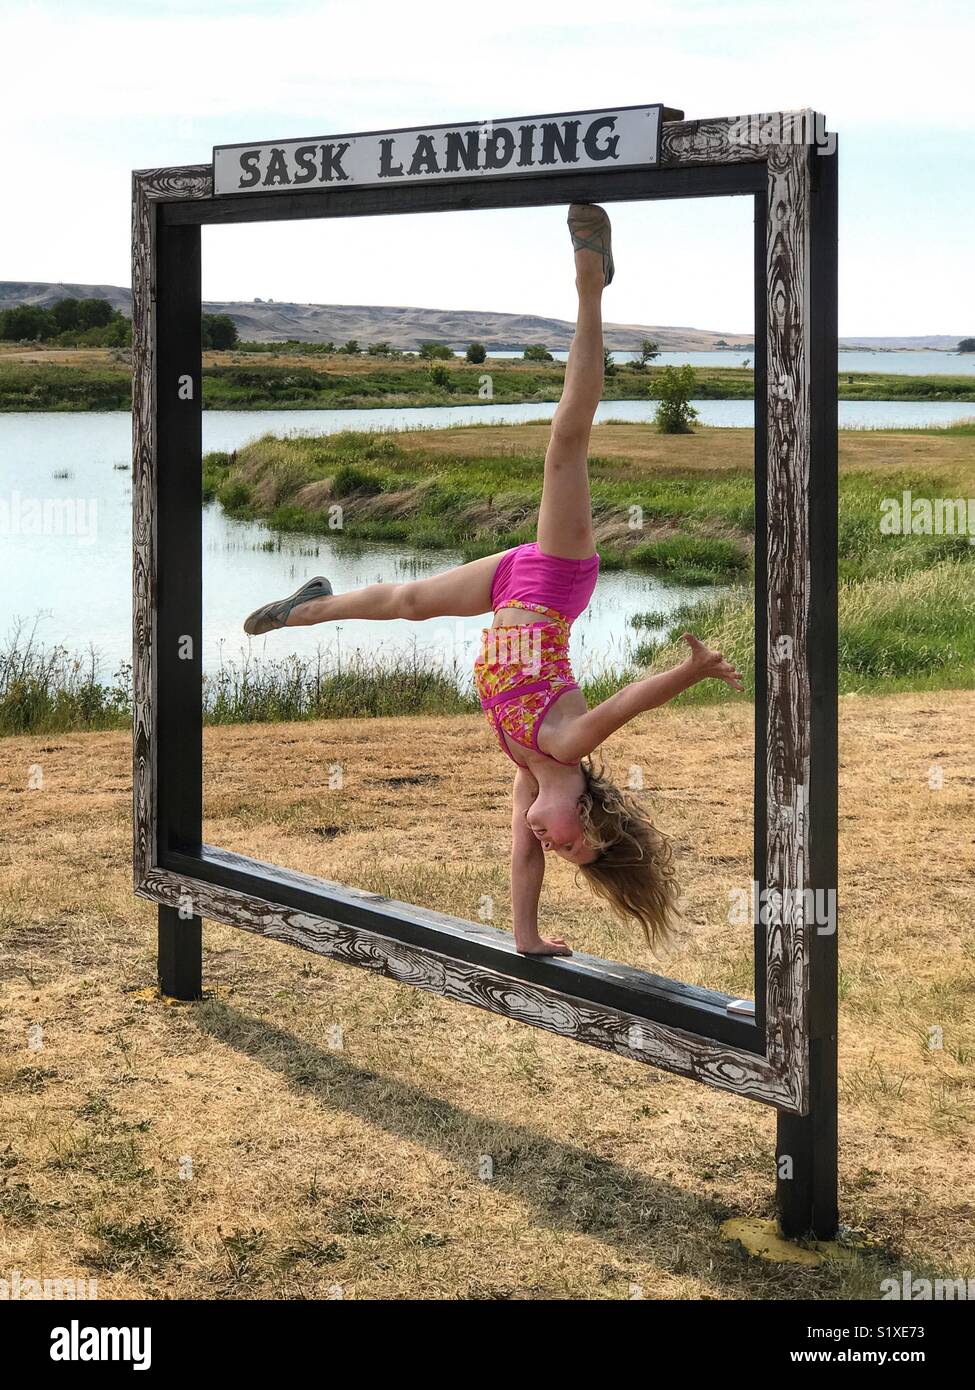 Una ragazza fa un handstand in Saskatchewan Landing, Canada. Foto Stock